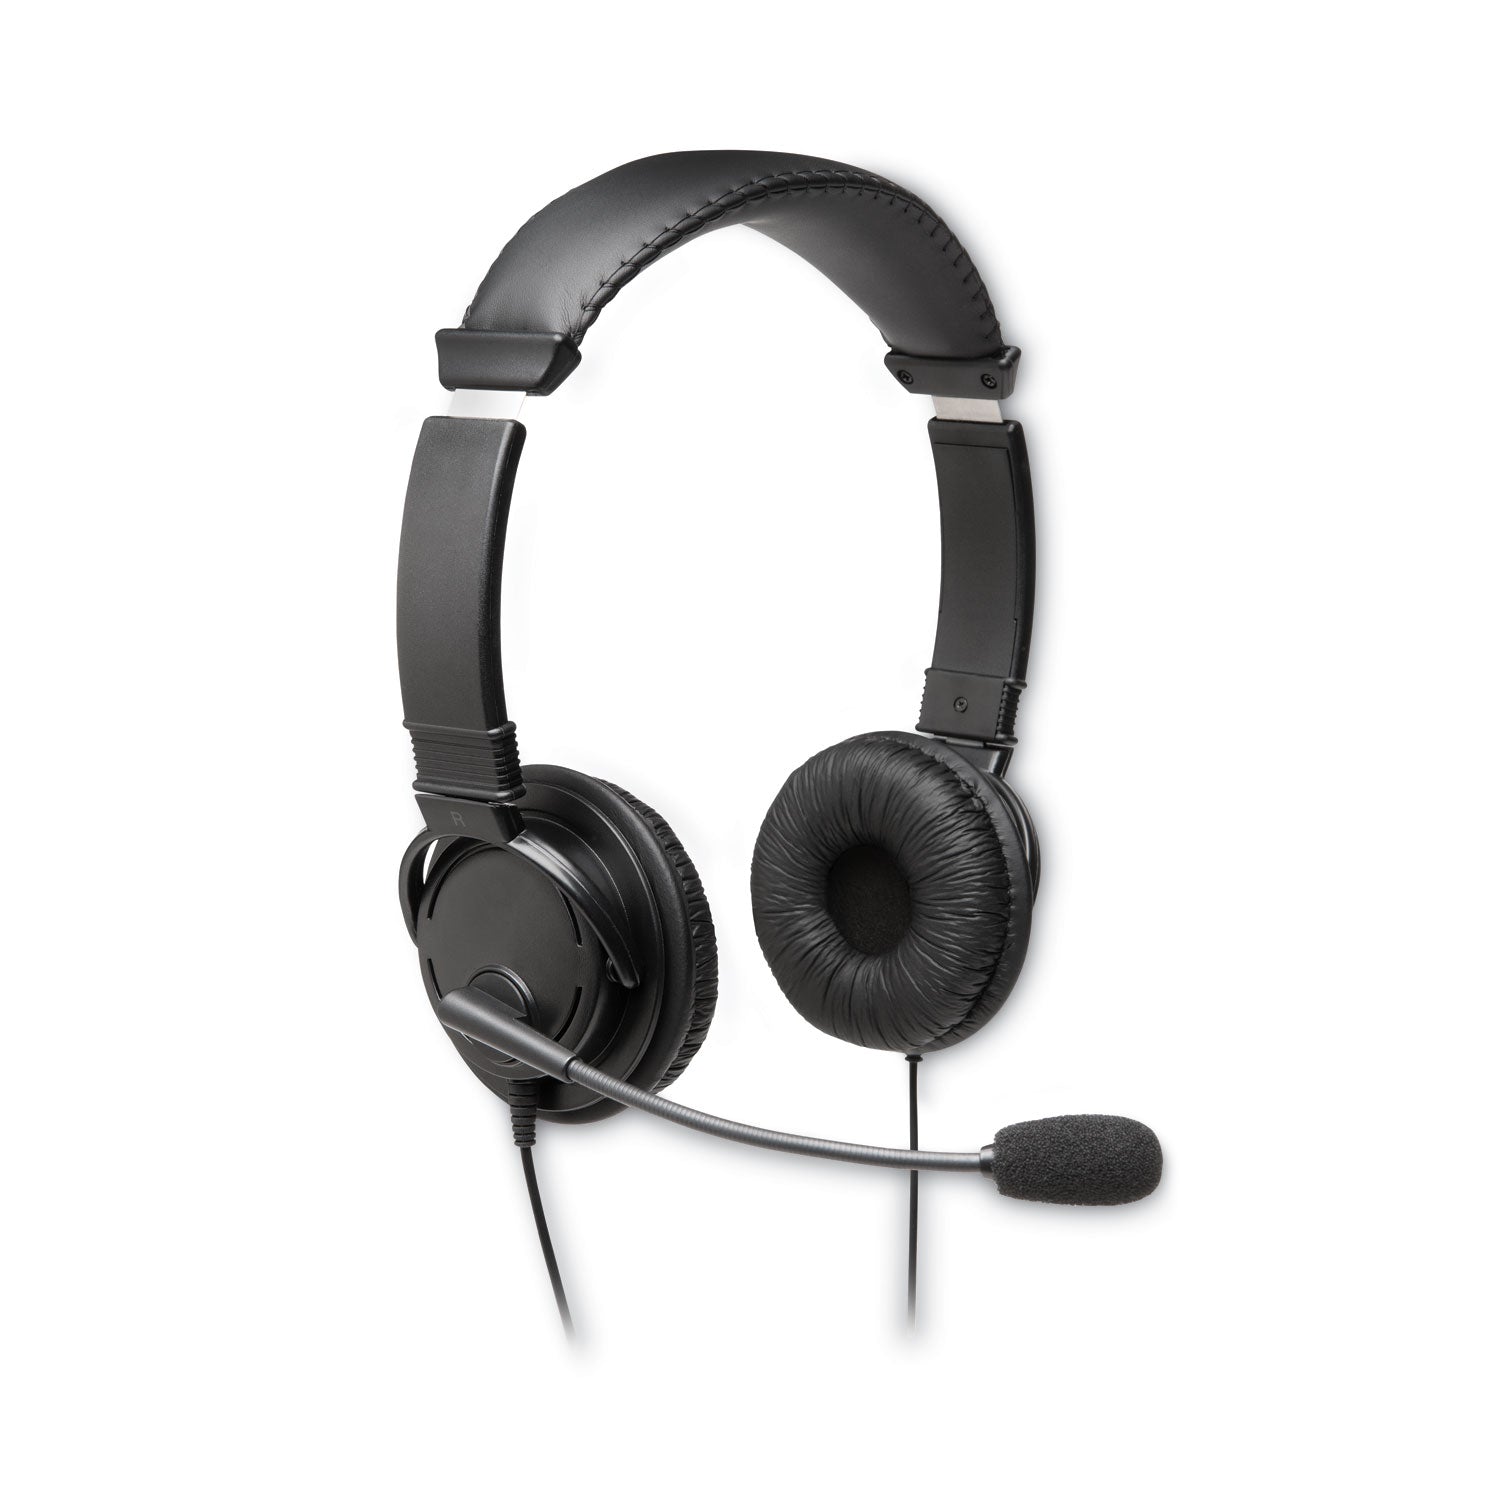 hi-fi-headphones-with-microphone-6-ft-cord-black_kmwk97601ww - 2